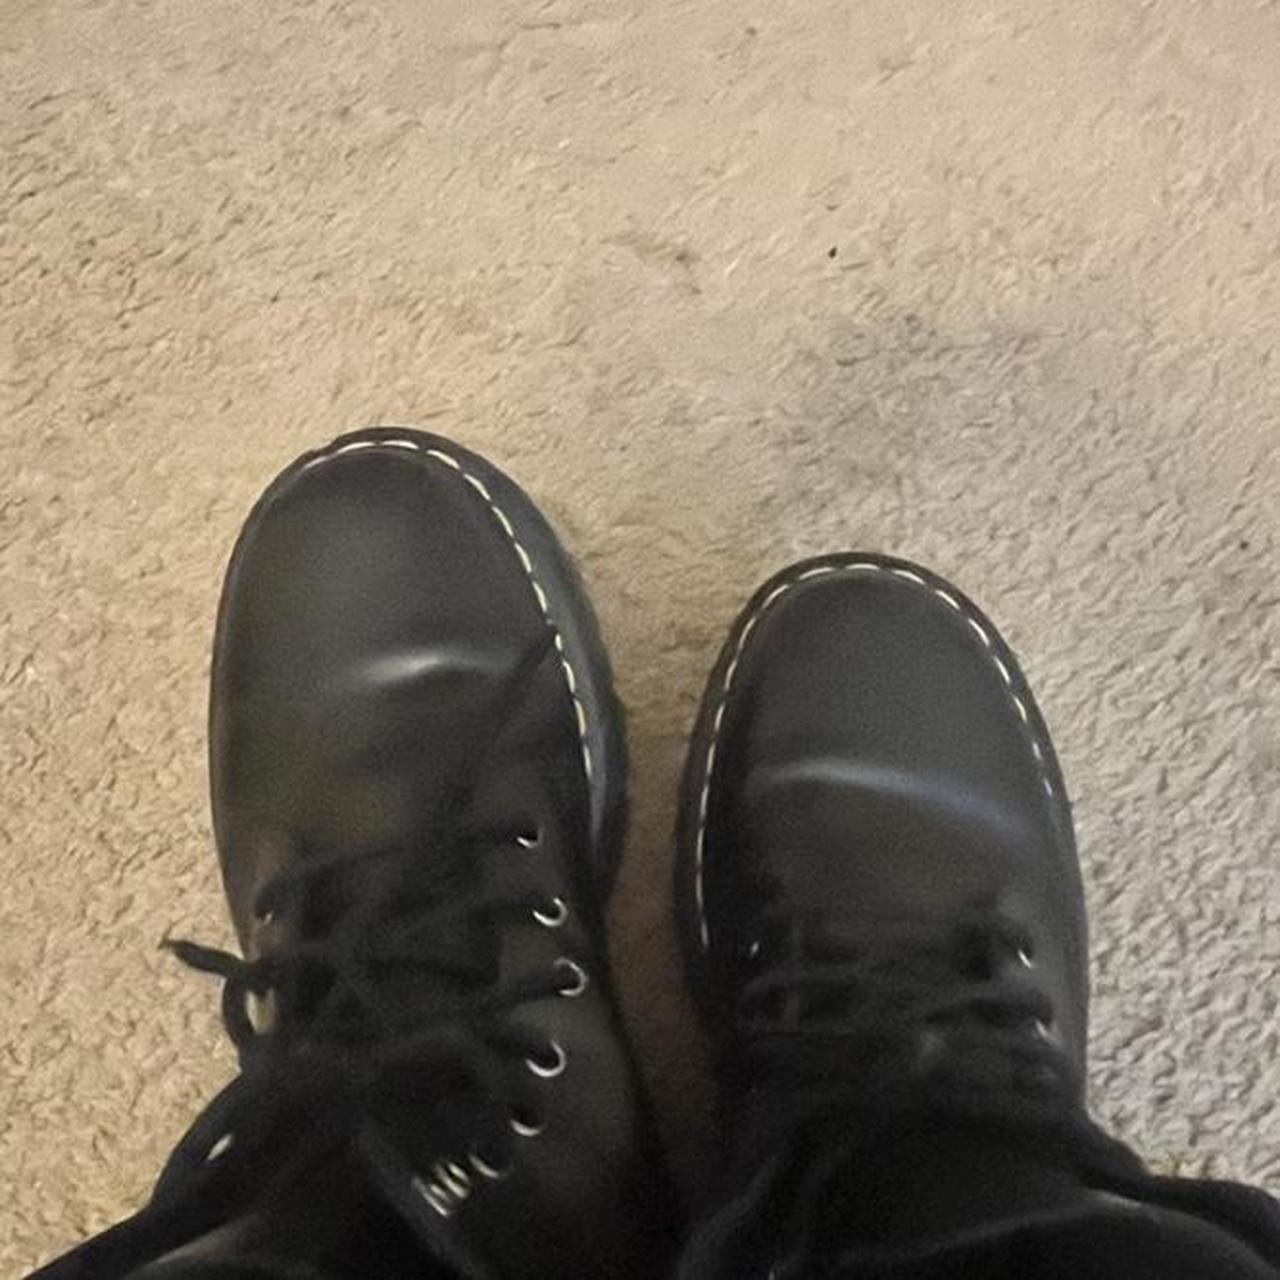 Dr. Martens Men's Black Boots (2)